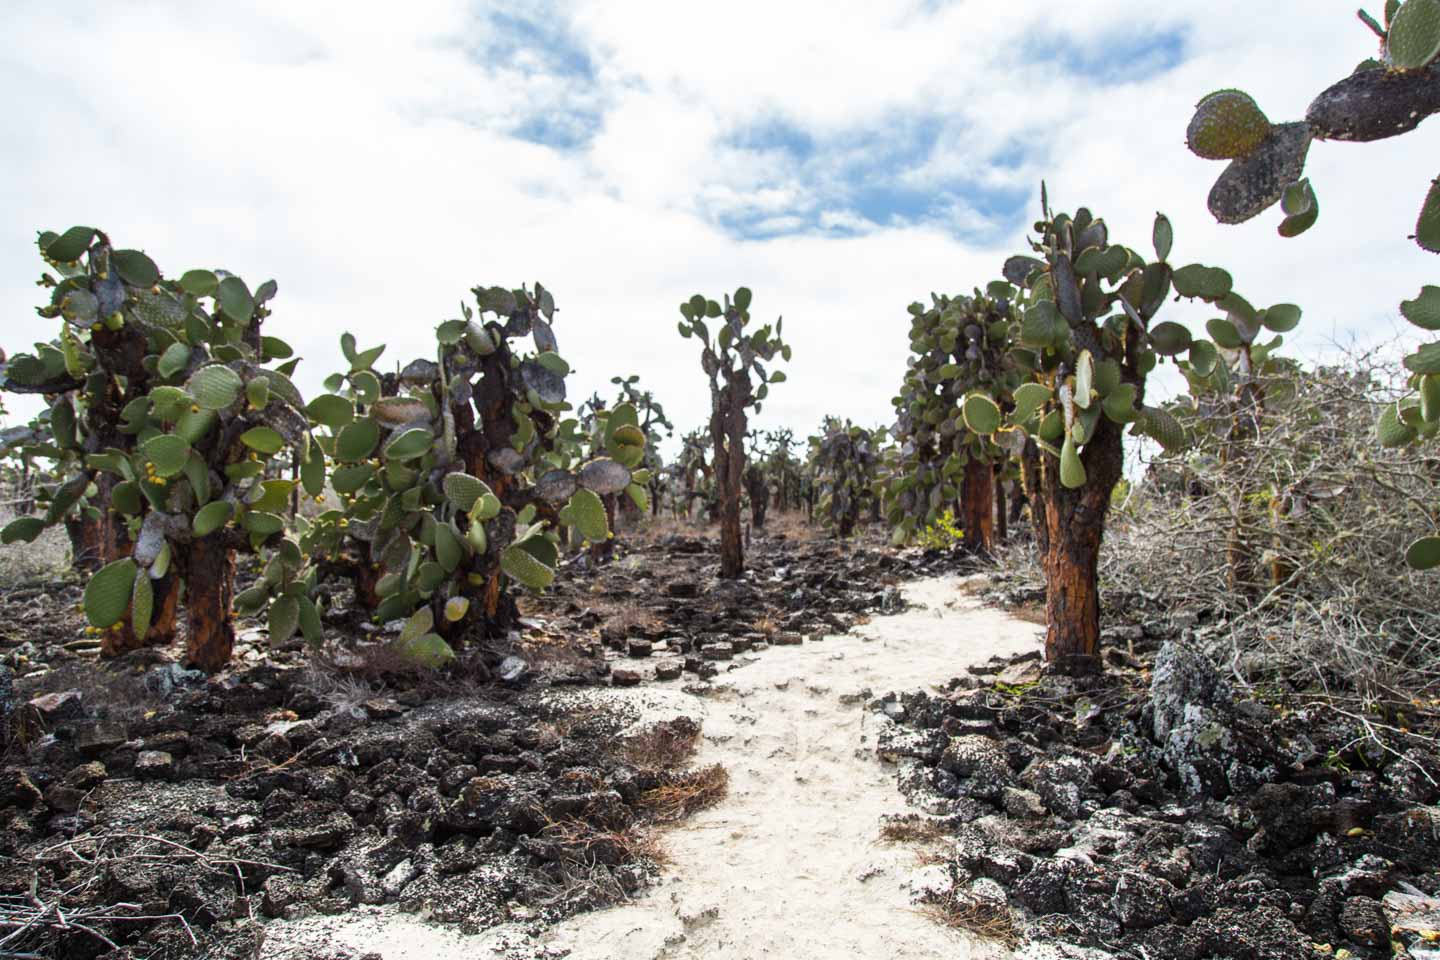 Sandy path along the prickly pear cacti and lava rocks, Tortuga Bay, Santa Cruz Island, Galápagos Islands, Ecuador